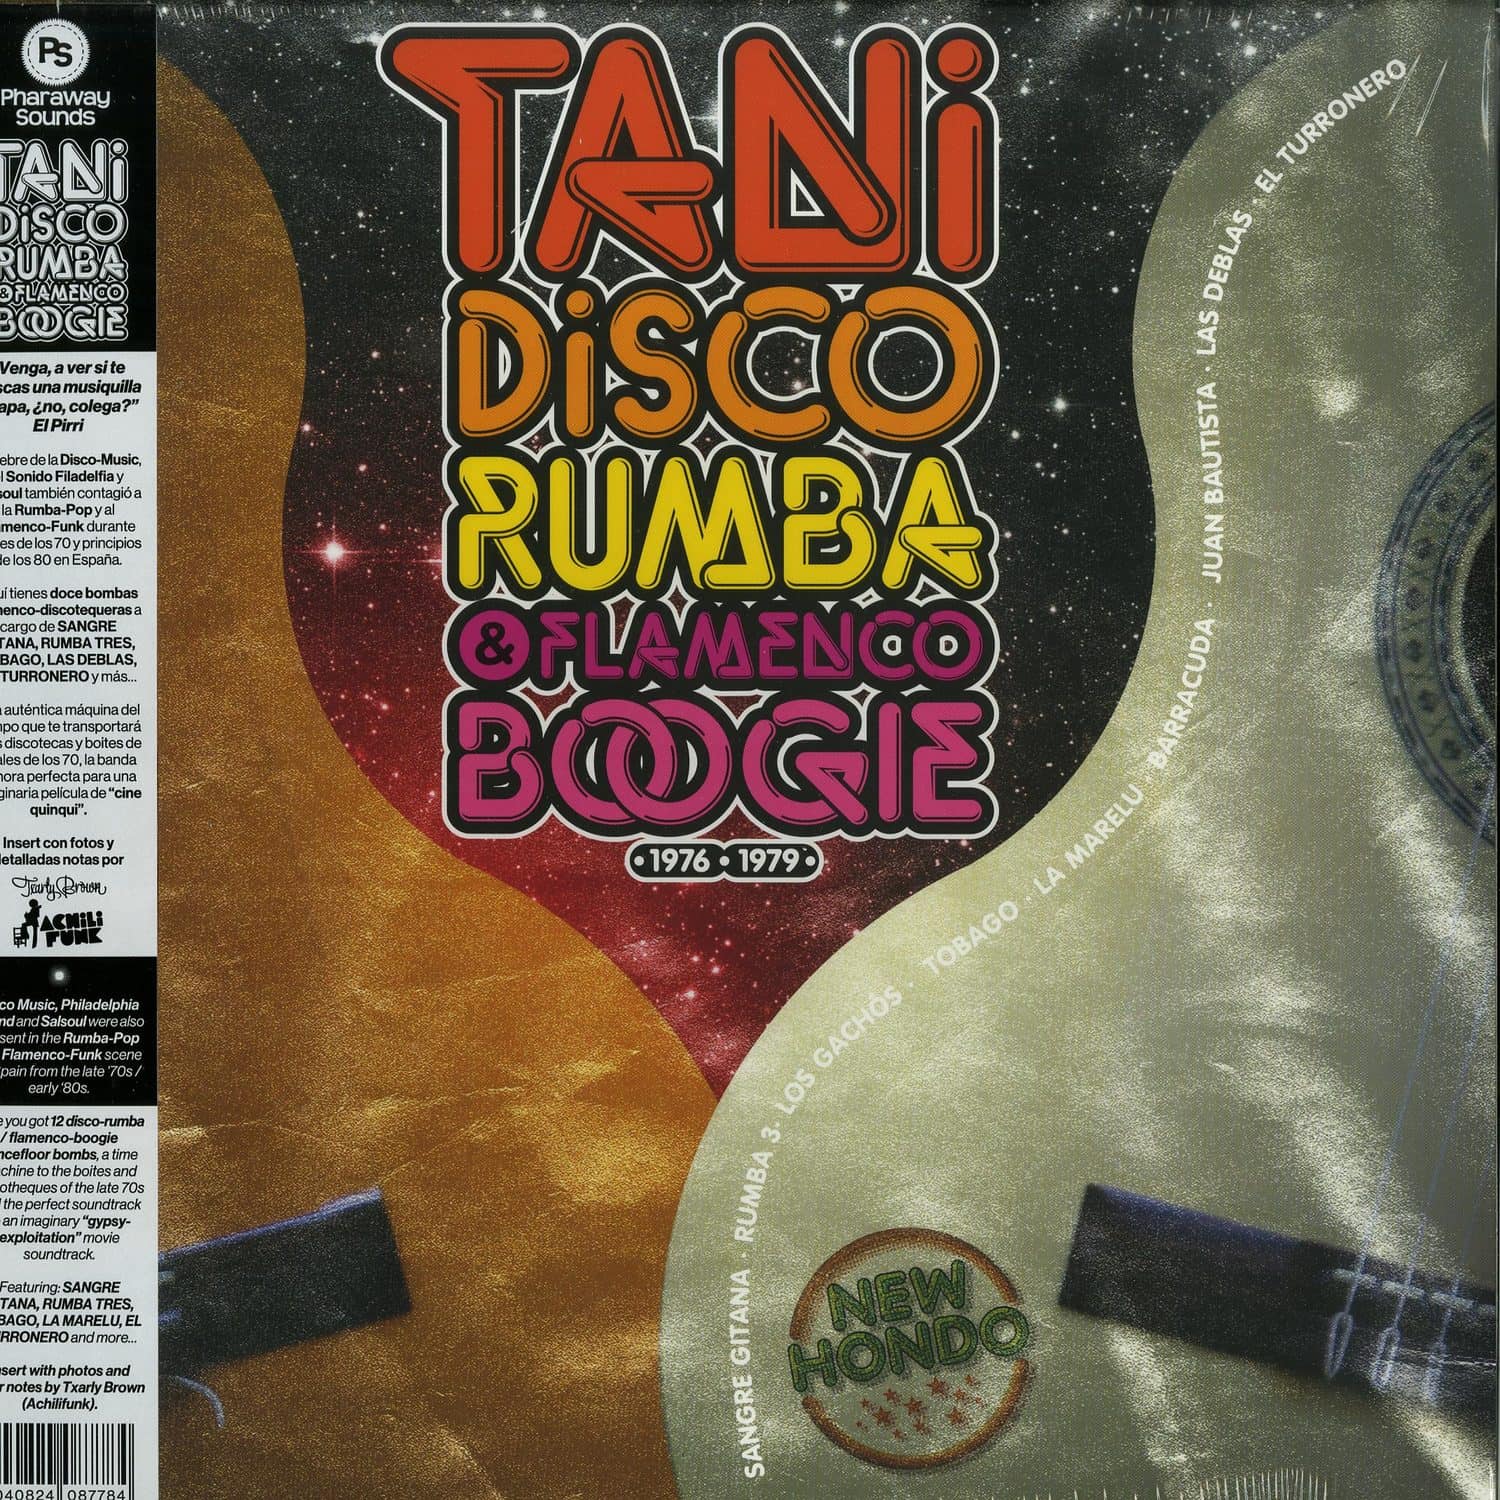 Various Artitsts - TANI: DISCO RUMBA & FLAMENCO BOOGIE 1976-79 